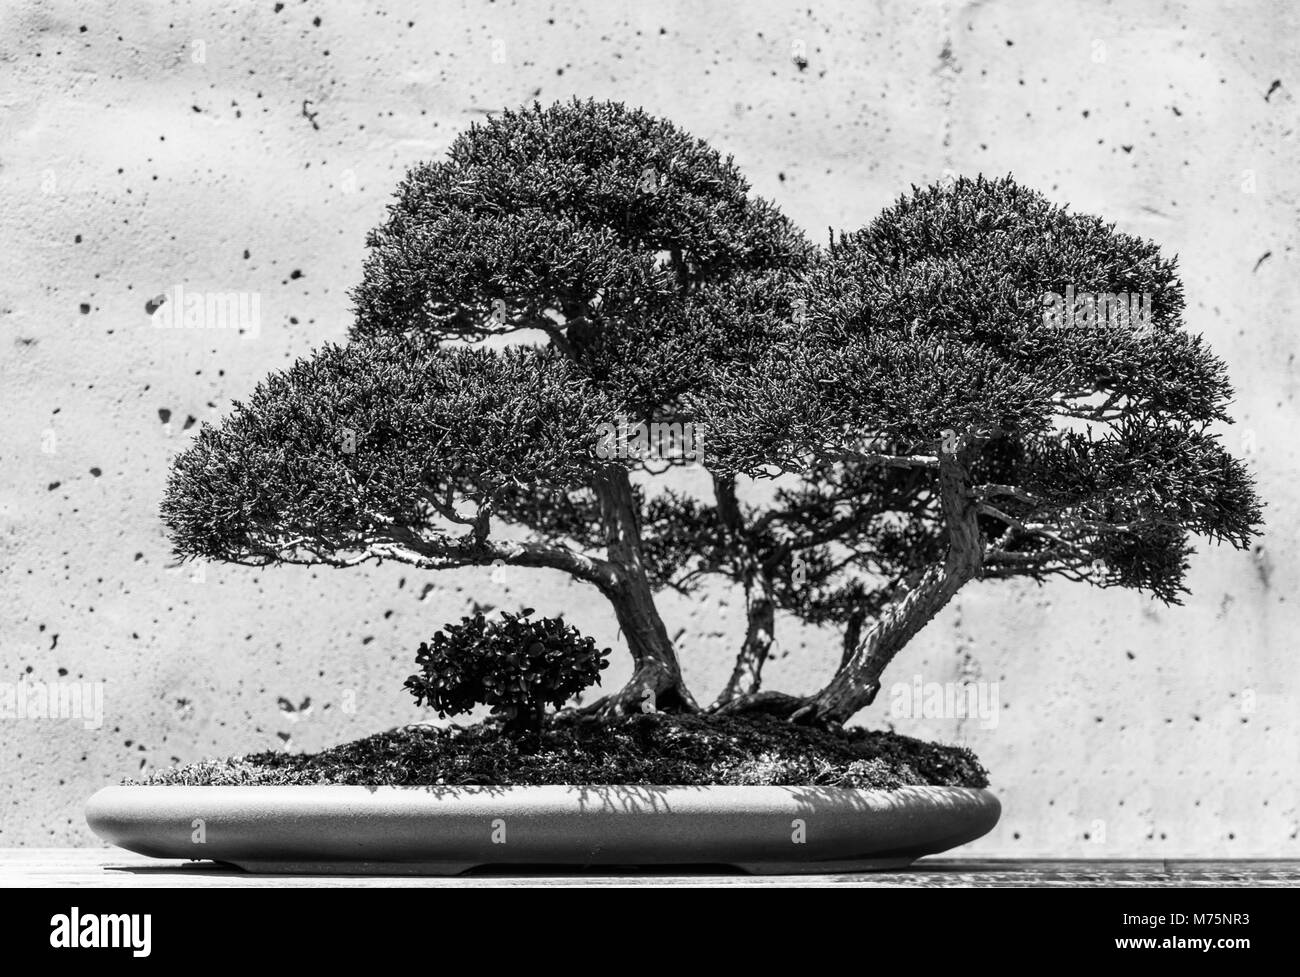 Bonsai Tree Black And White Stock Photos Images Alamy